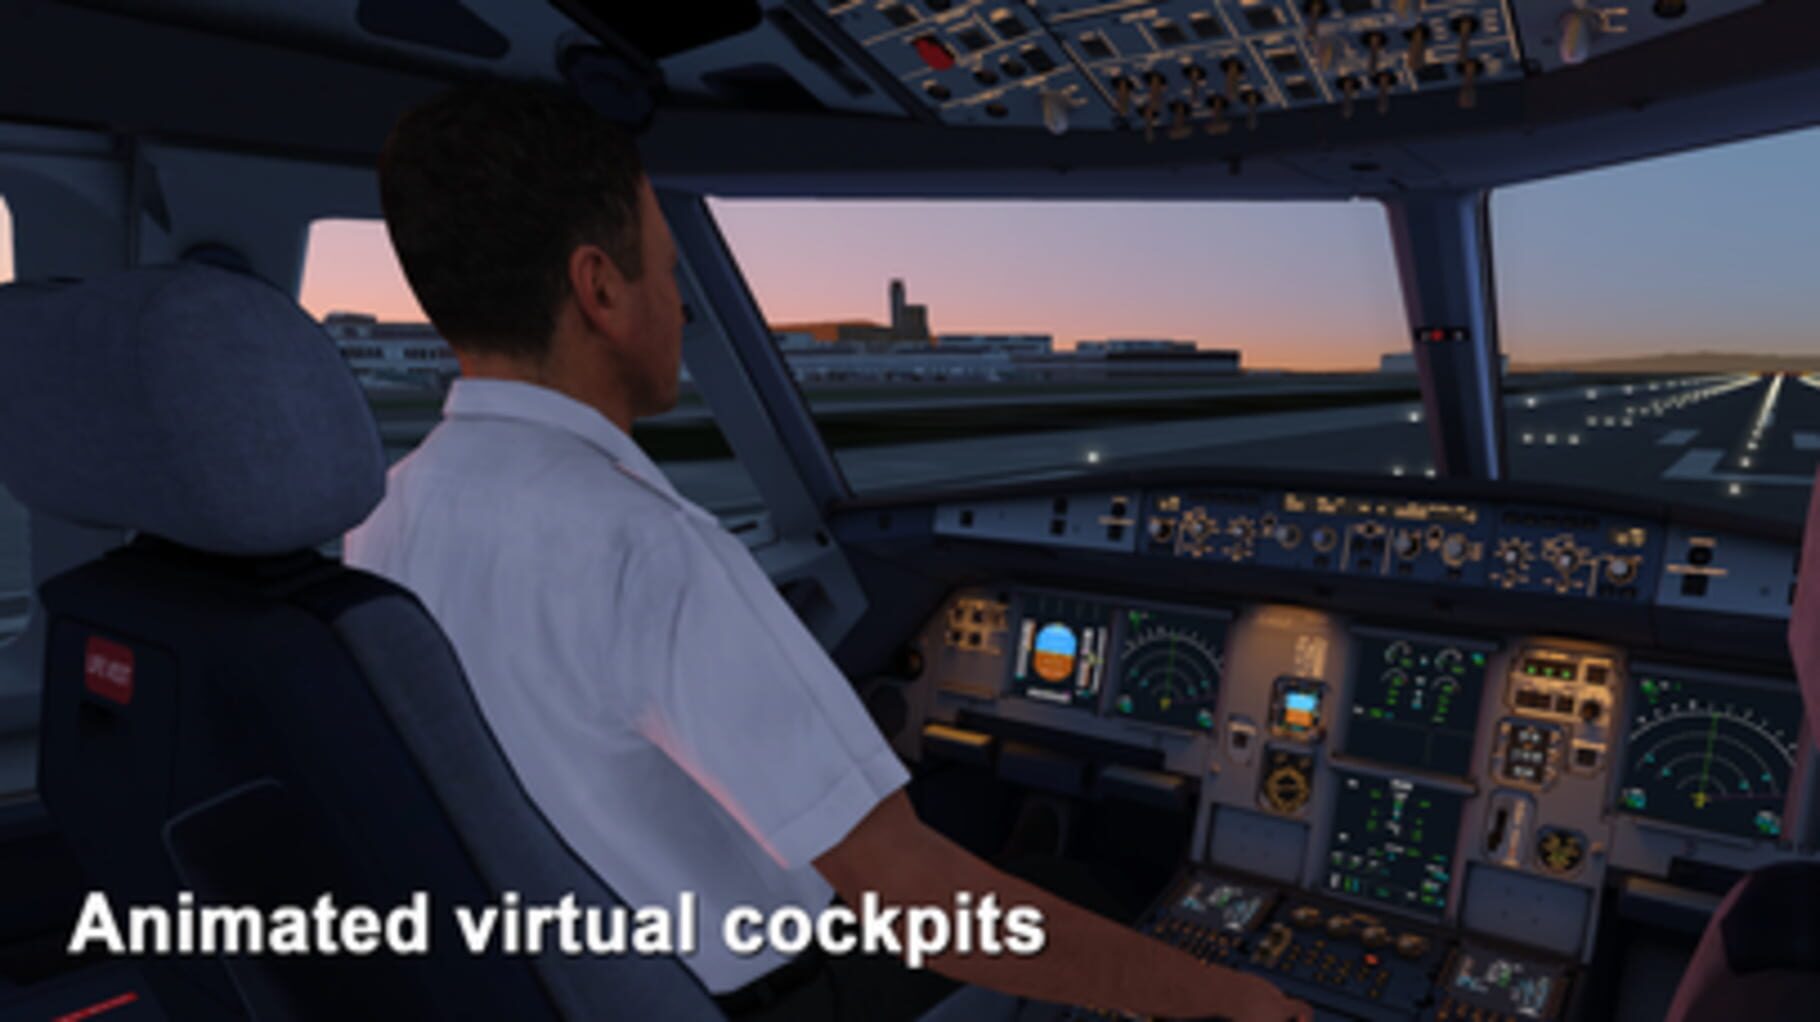 Aerofly FS 2 Flight Simulator screenshots